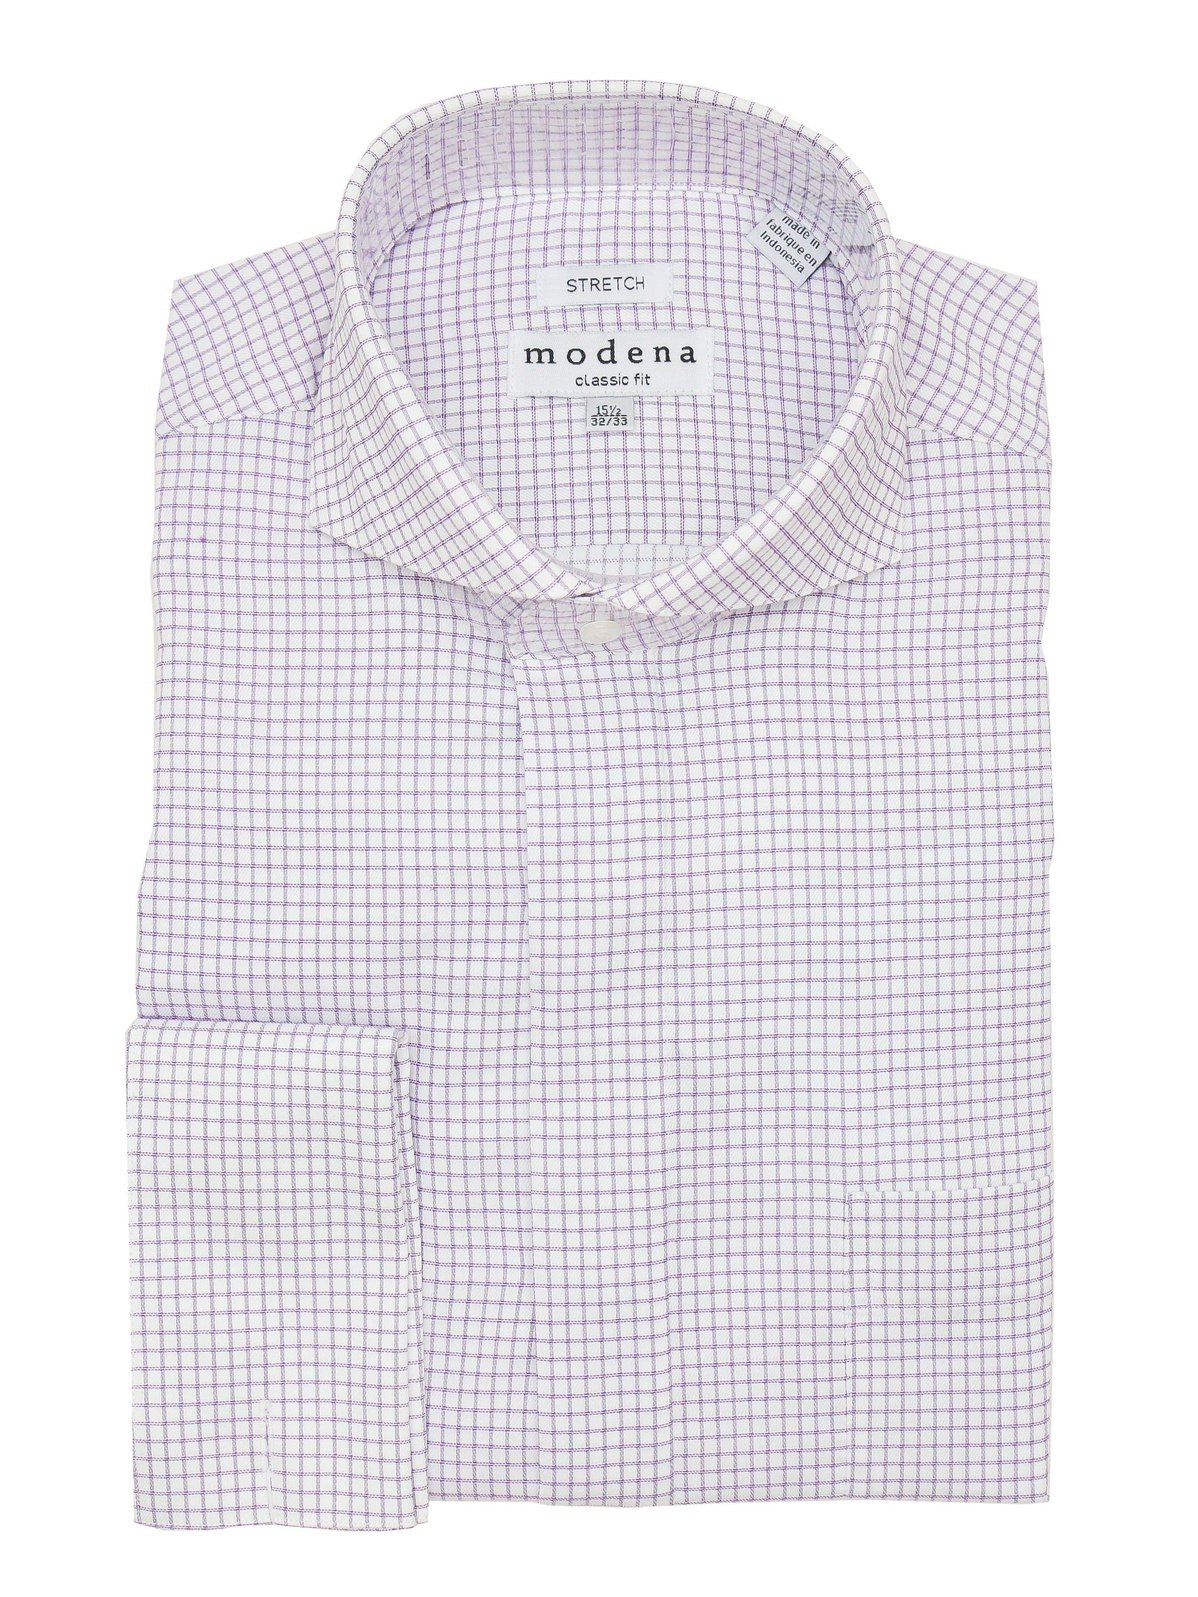 Brand M SHIRTS 17.5 / 32-33 Mens Cotton Purple Check Classic Fit Cutaway Collar Stretch Dress Shirt